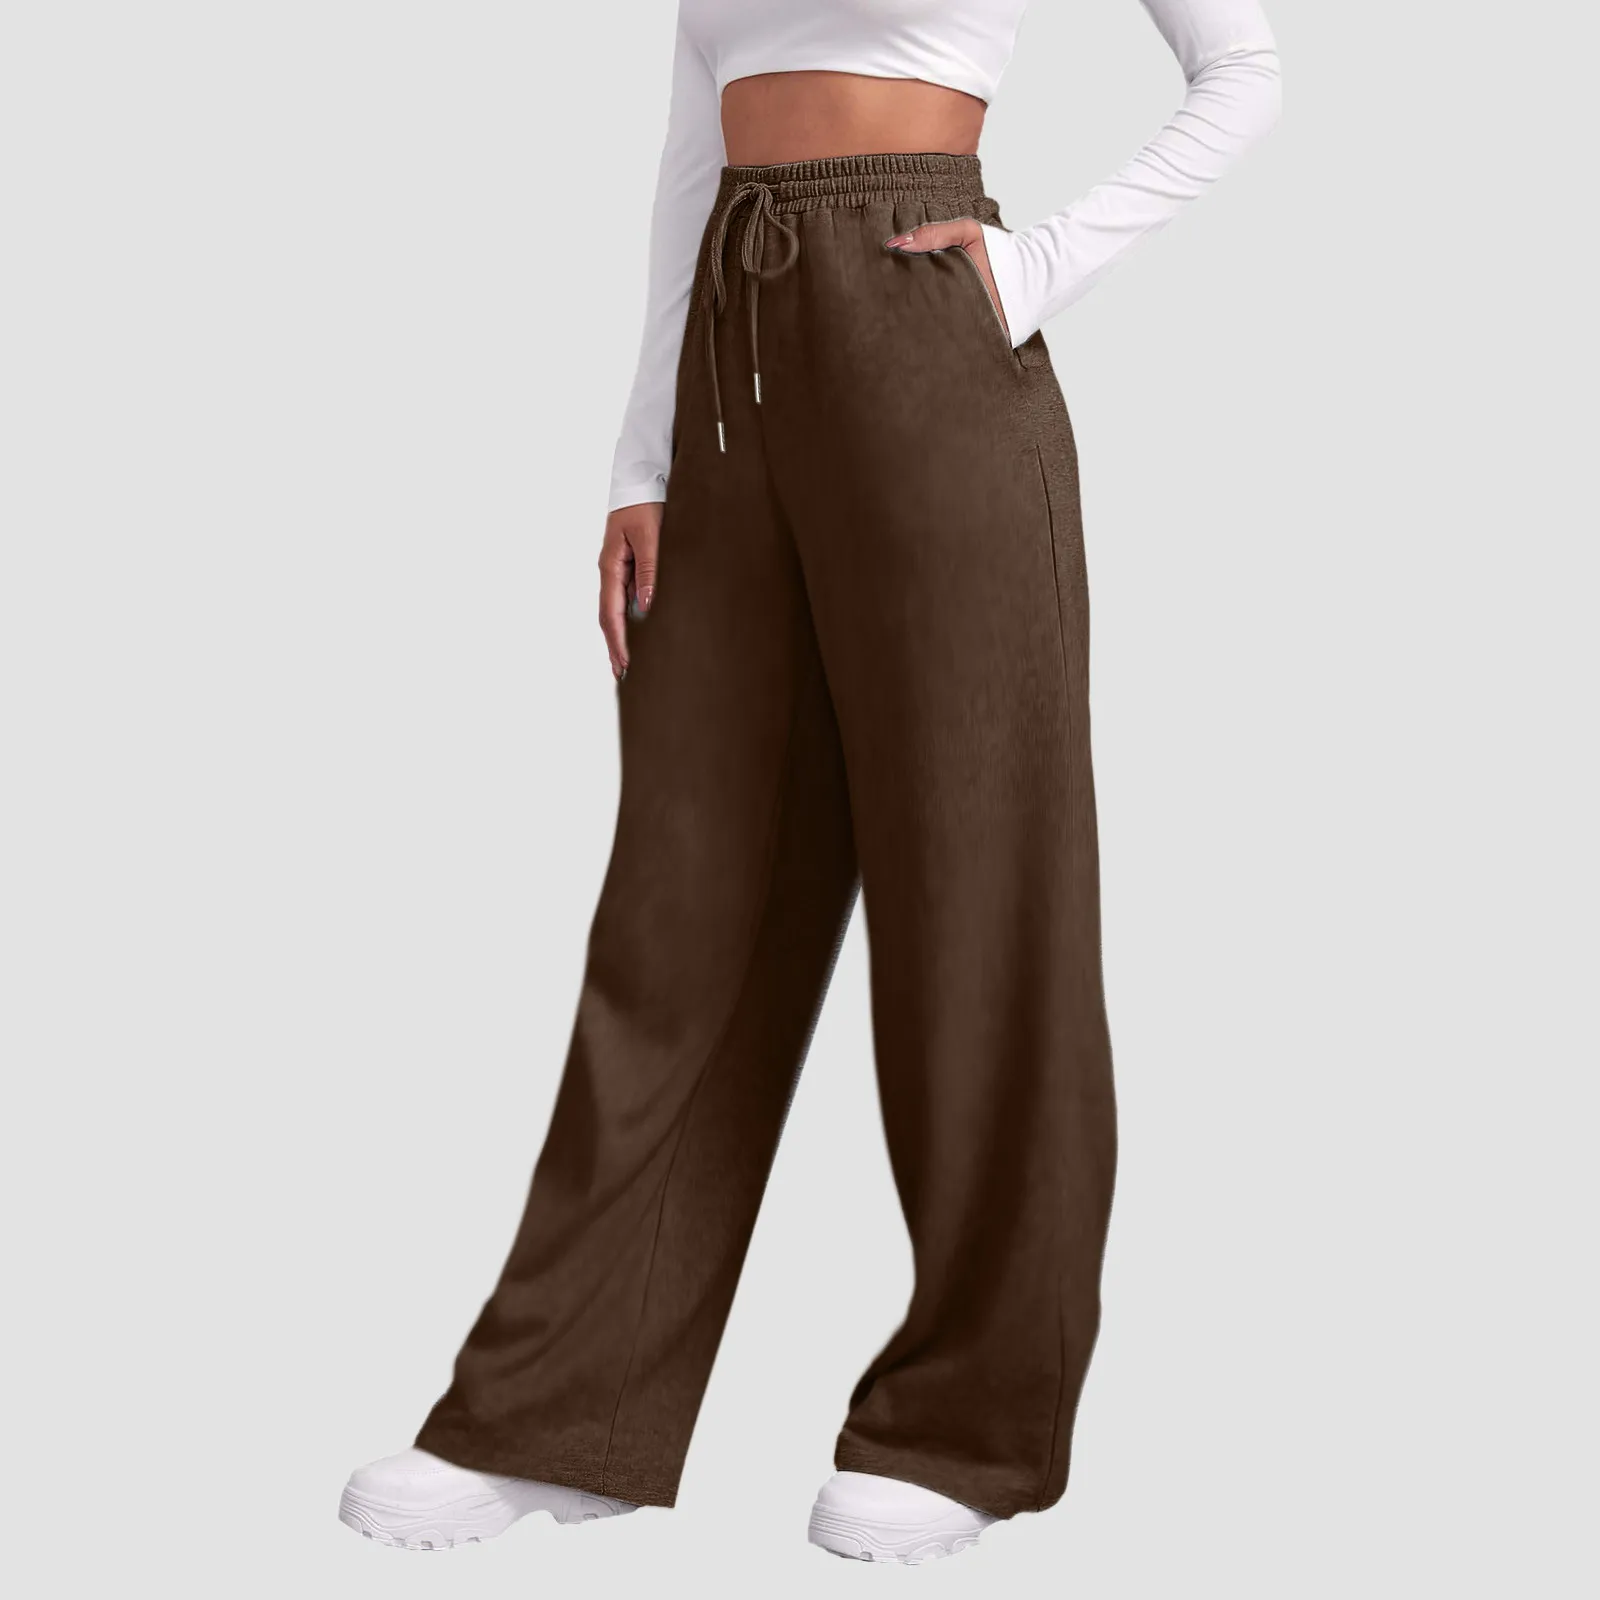 

Wide Leg Pants For Women’S Fleece Lined Sweatpants Straight Pants Bottom All-Math Plain Fitness Joggers Pants Travel Basic